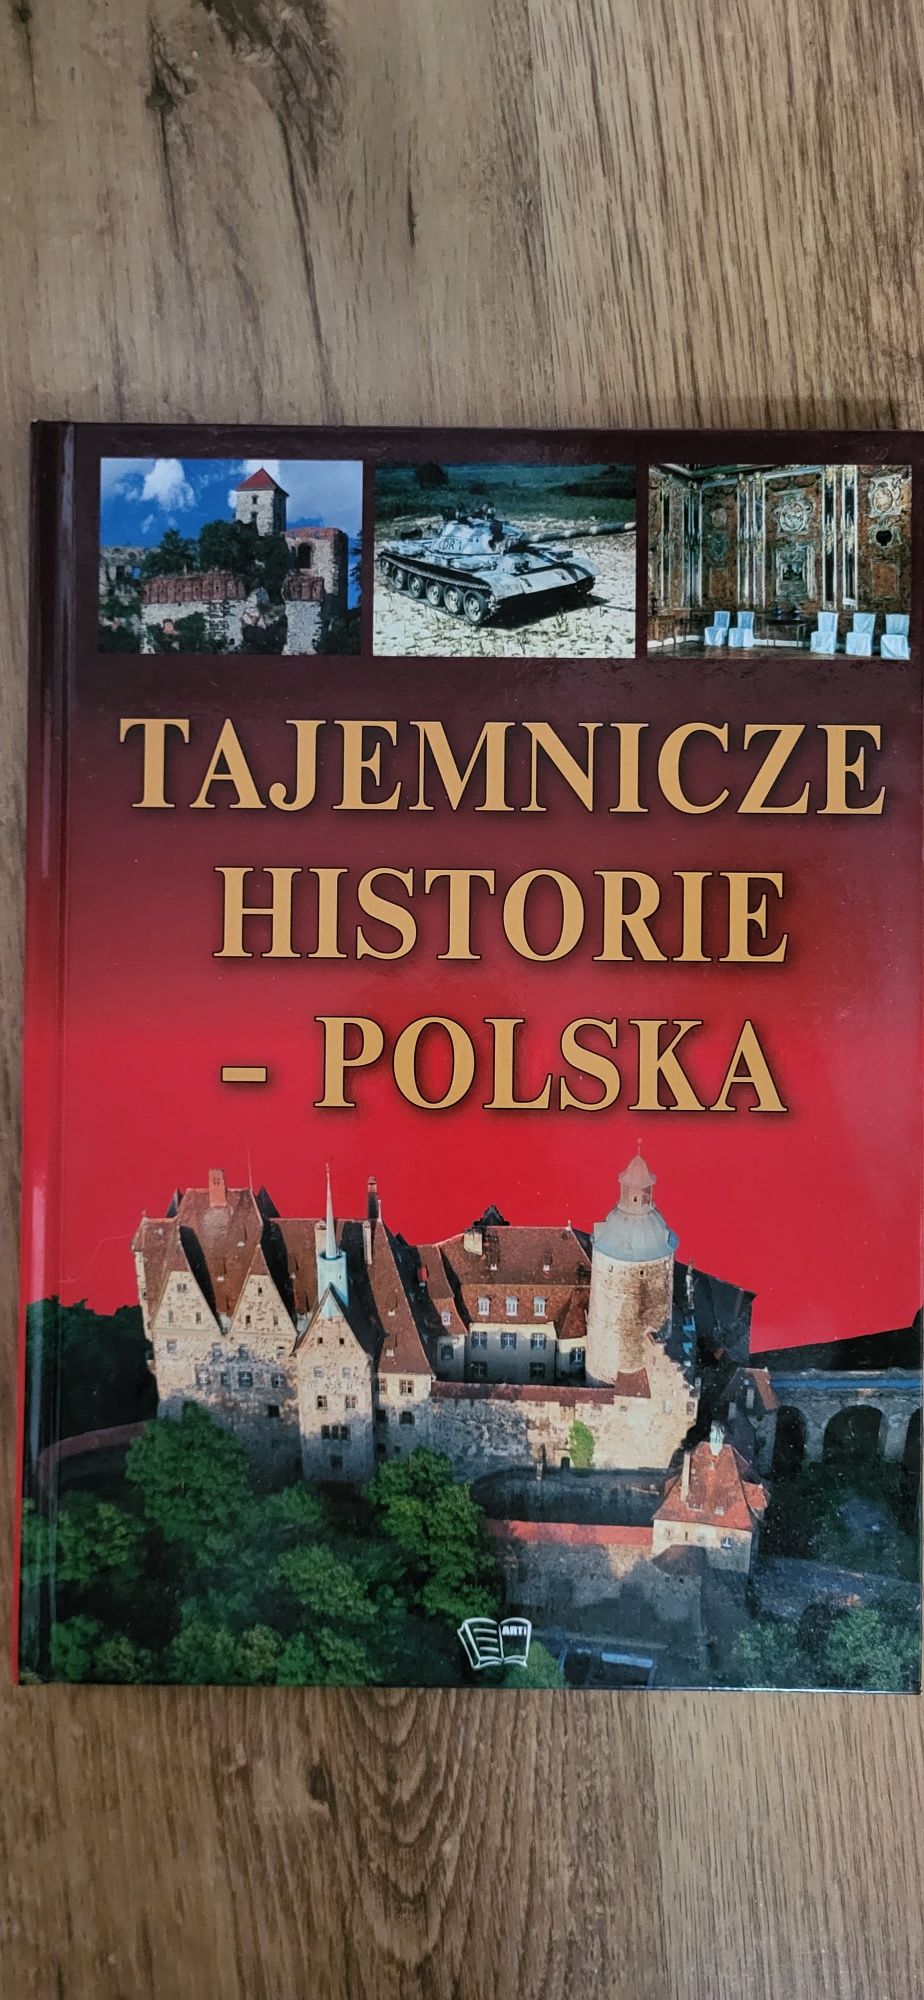 Tajemnicze historie Polska